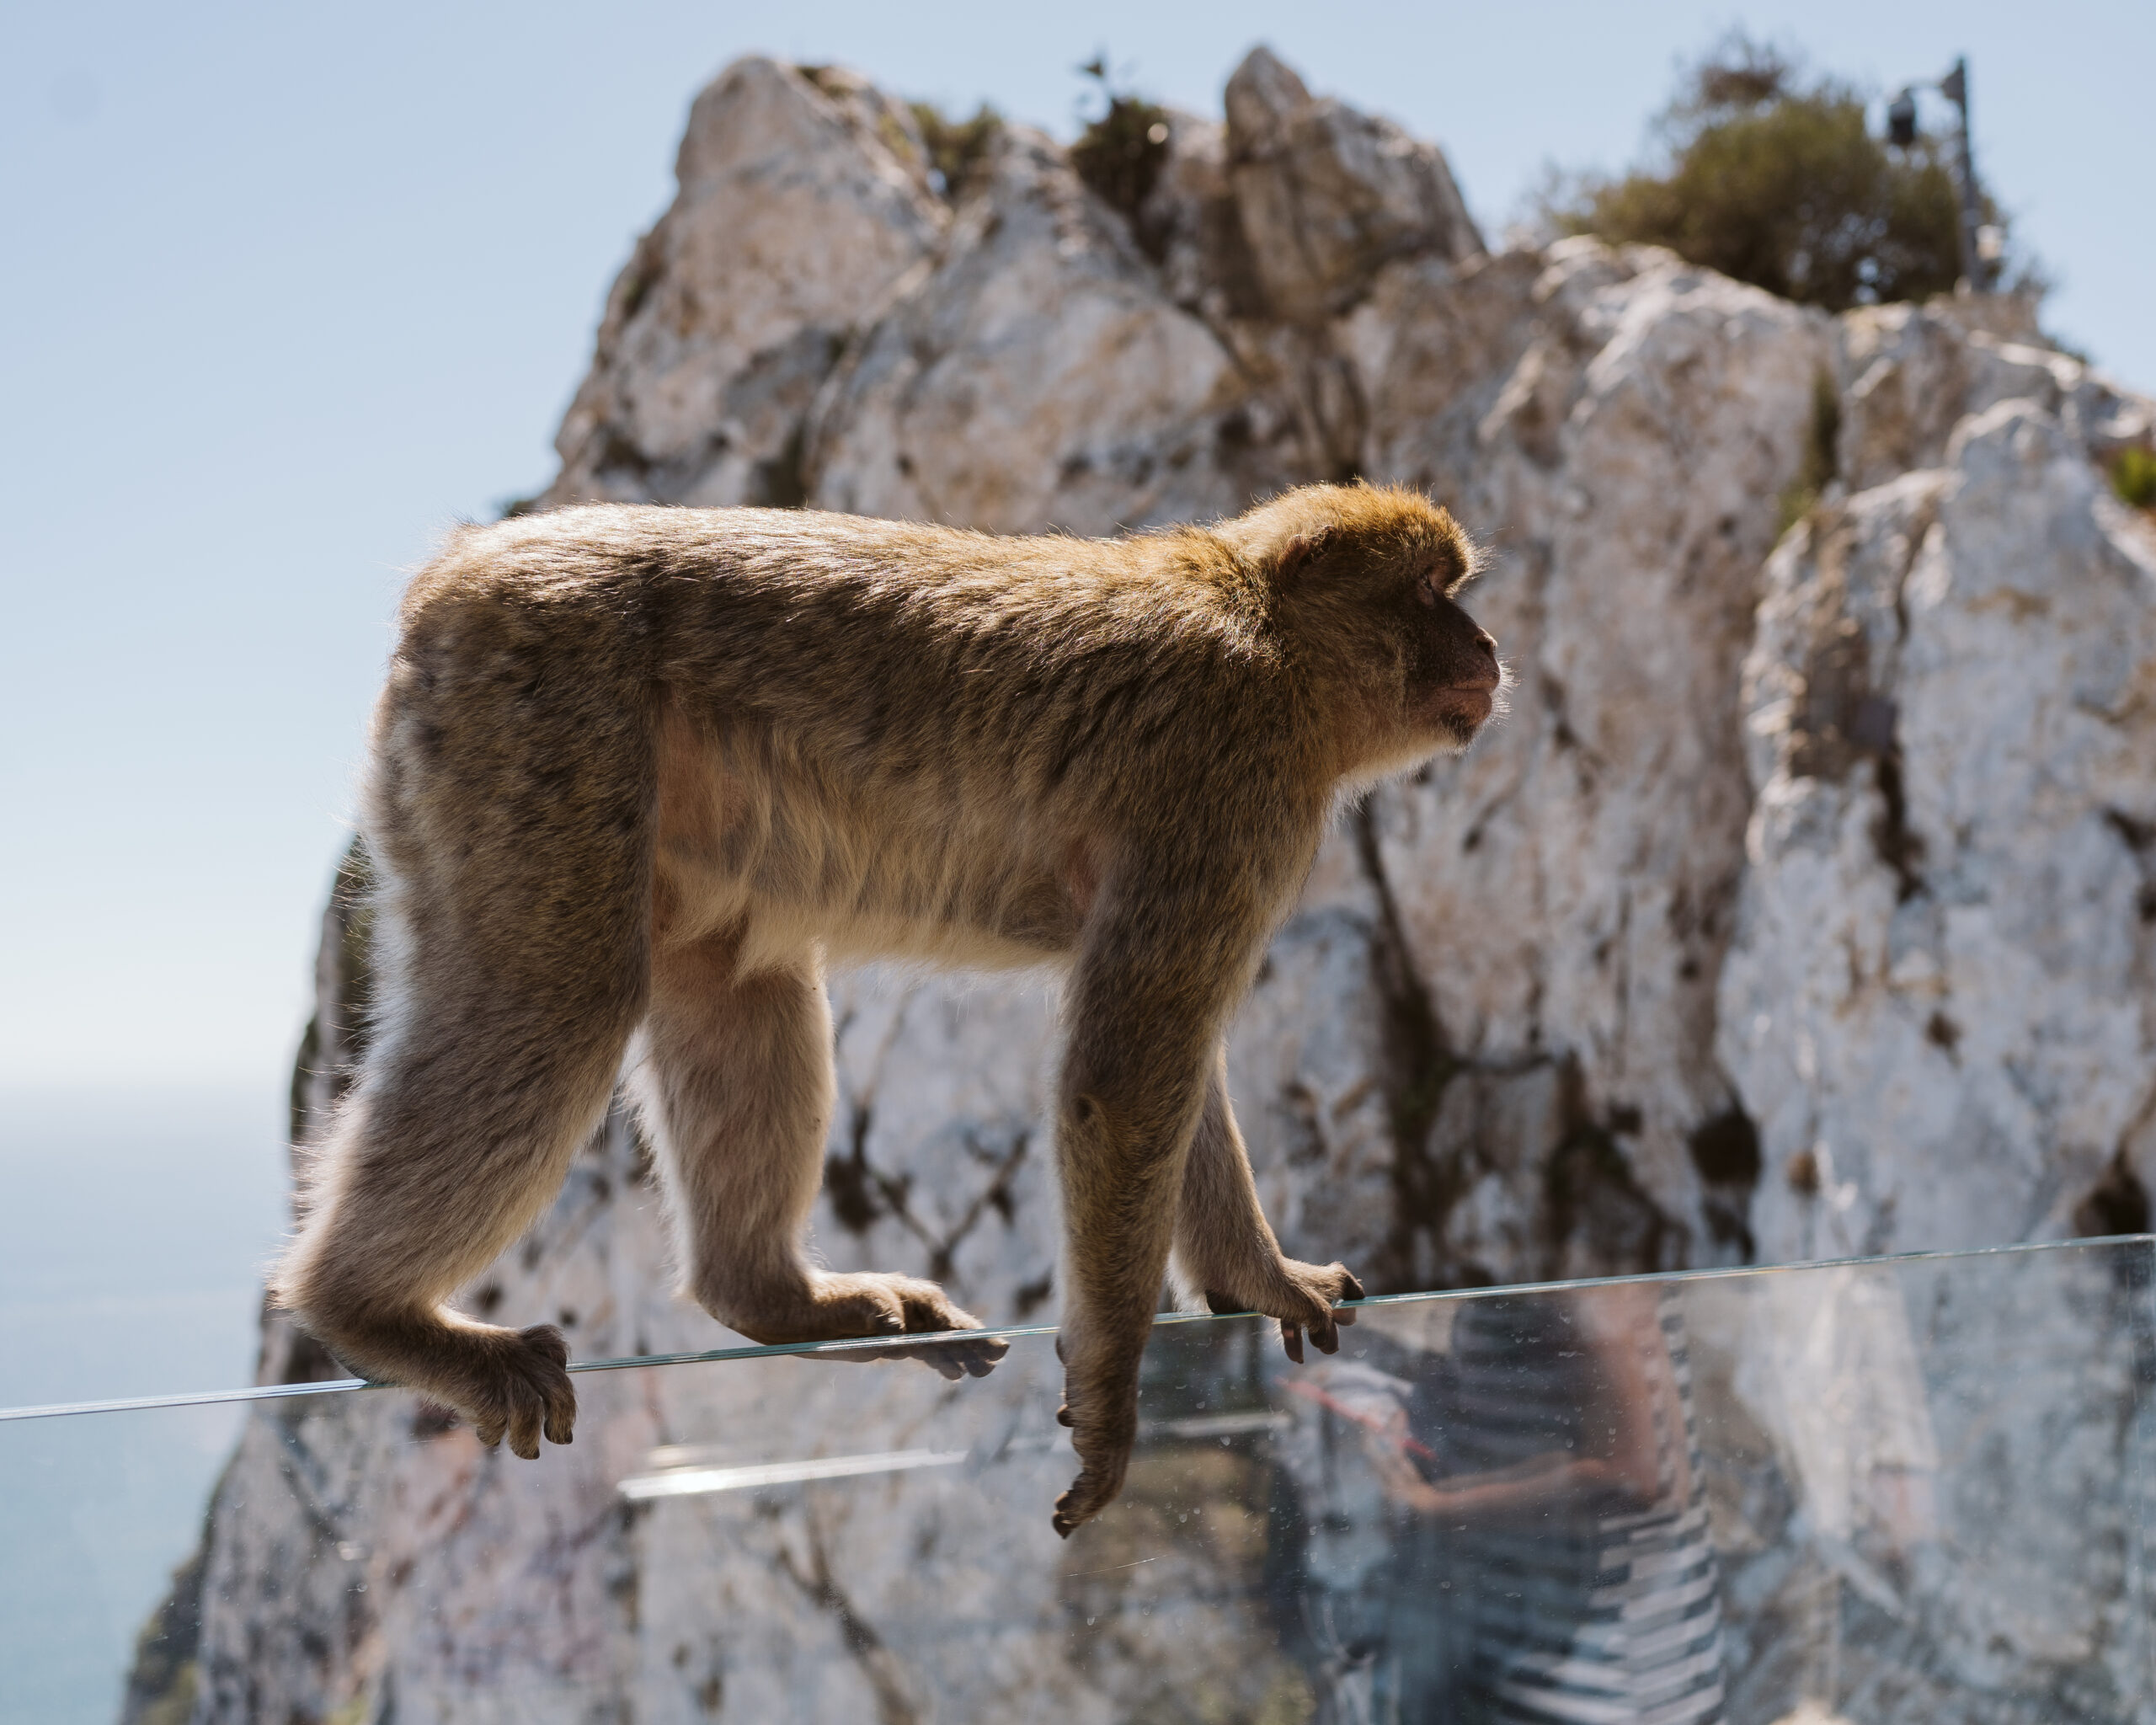 Monkey on the Rock